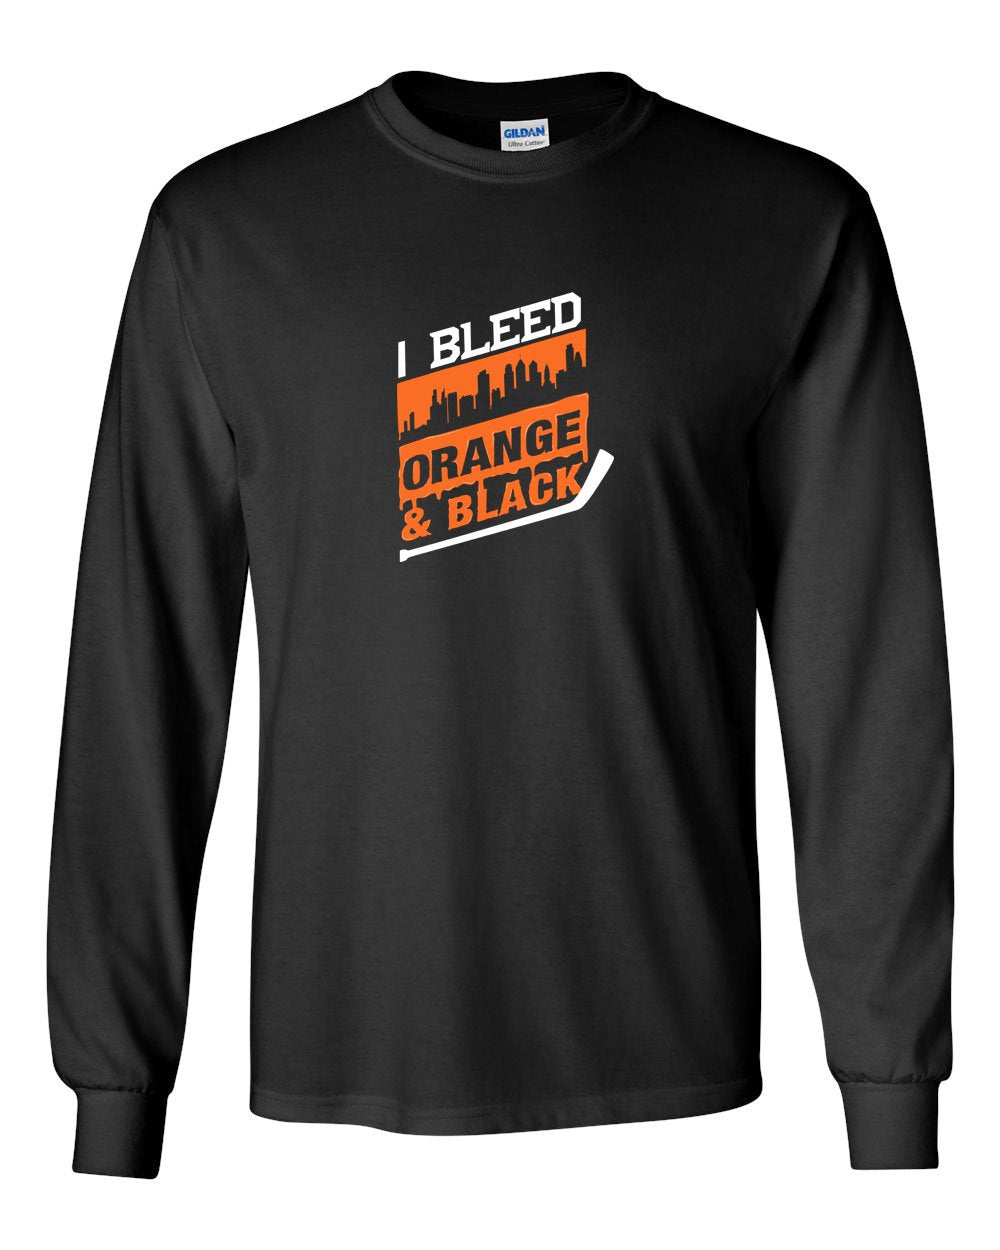 I Bleed Orange and Black MENS Long Sleeve Heavy Cotton T-Shirt